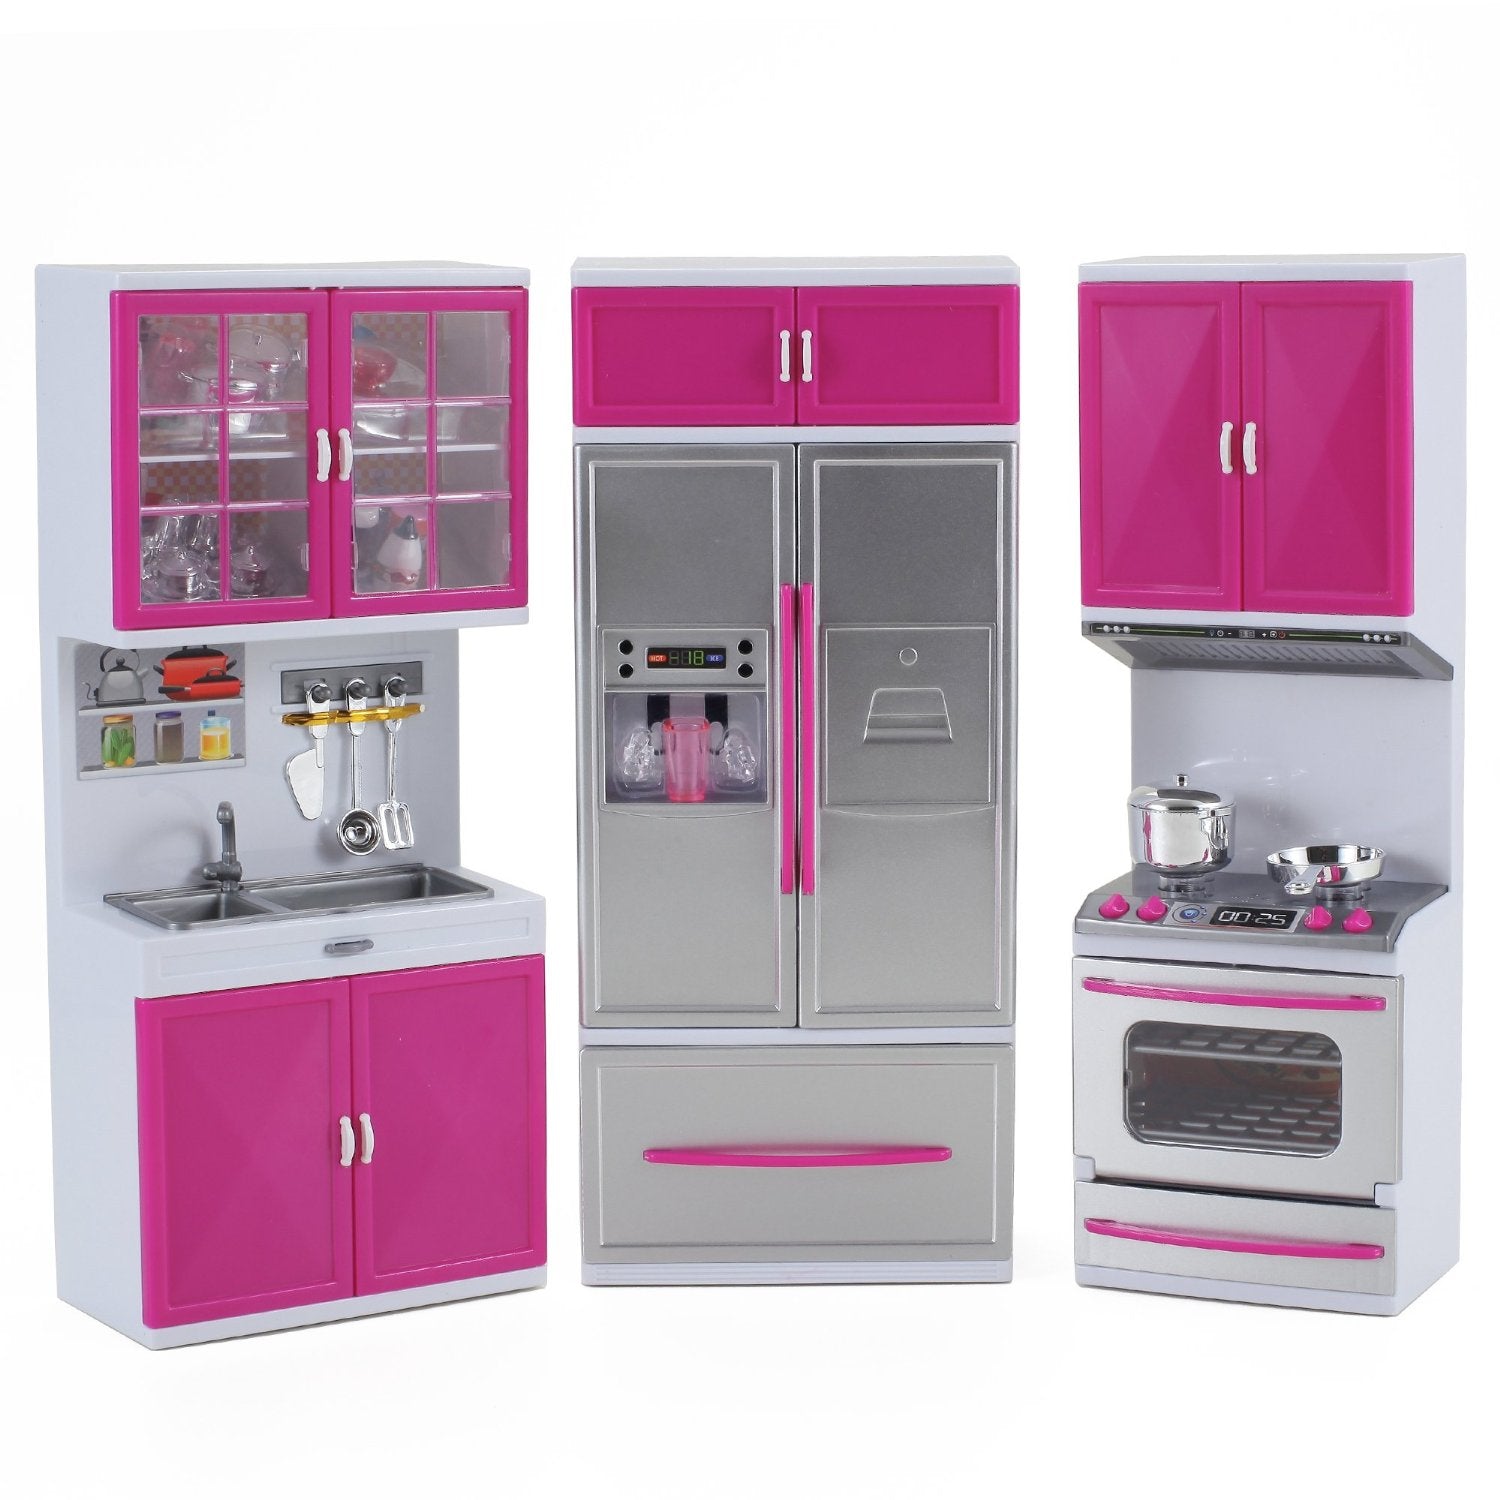 Kitchen Set: Mini Appliances - ToyStationTT